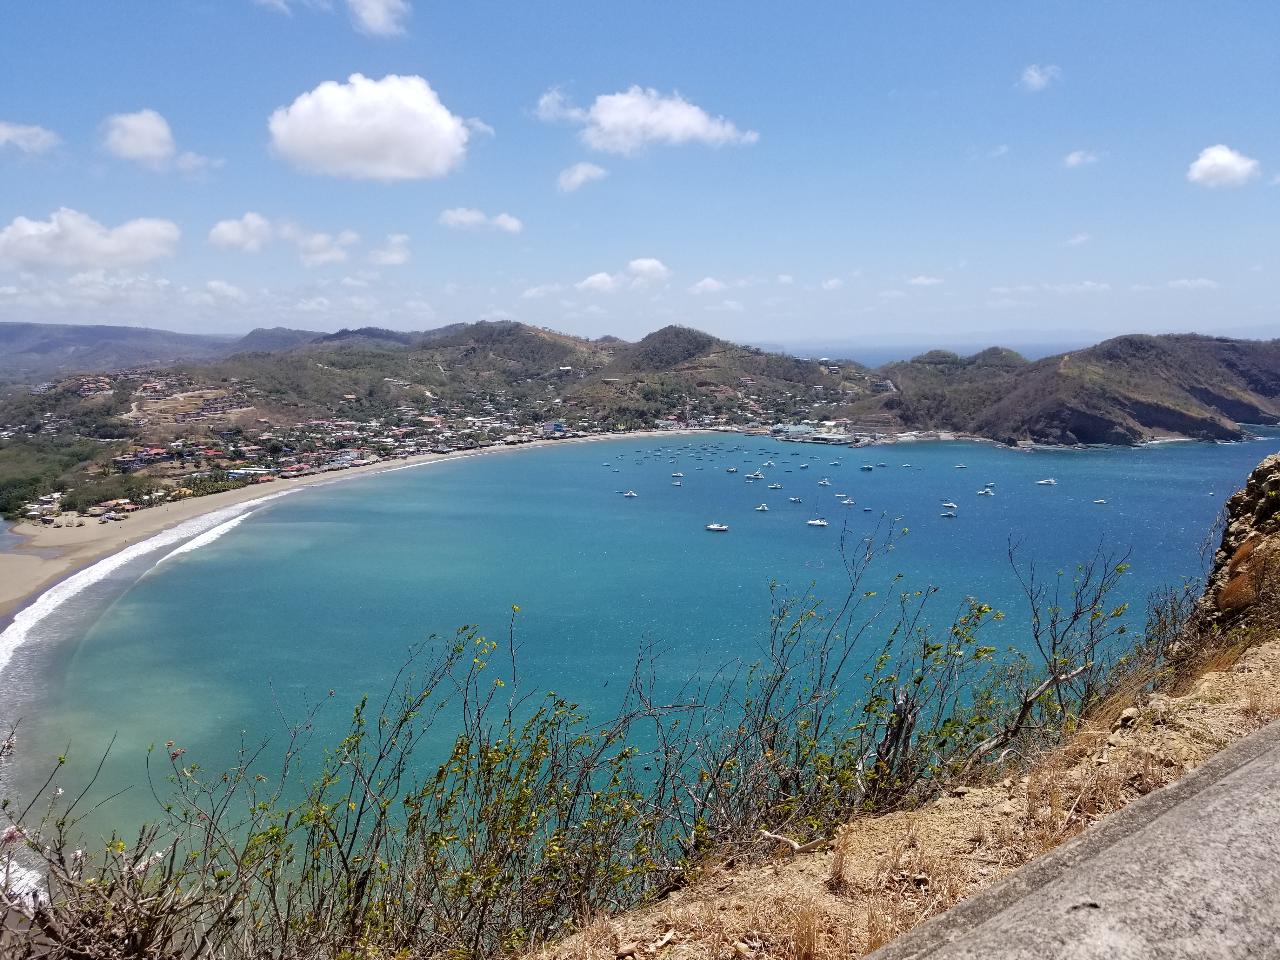 San Juan del Sur - Port Activity - Exploring the Beaches of Southern Nicaragua